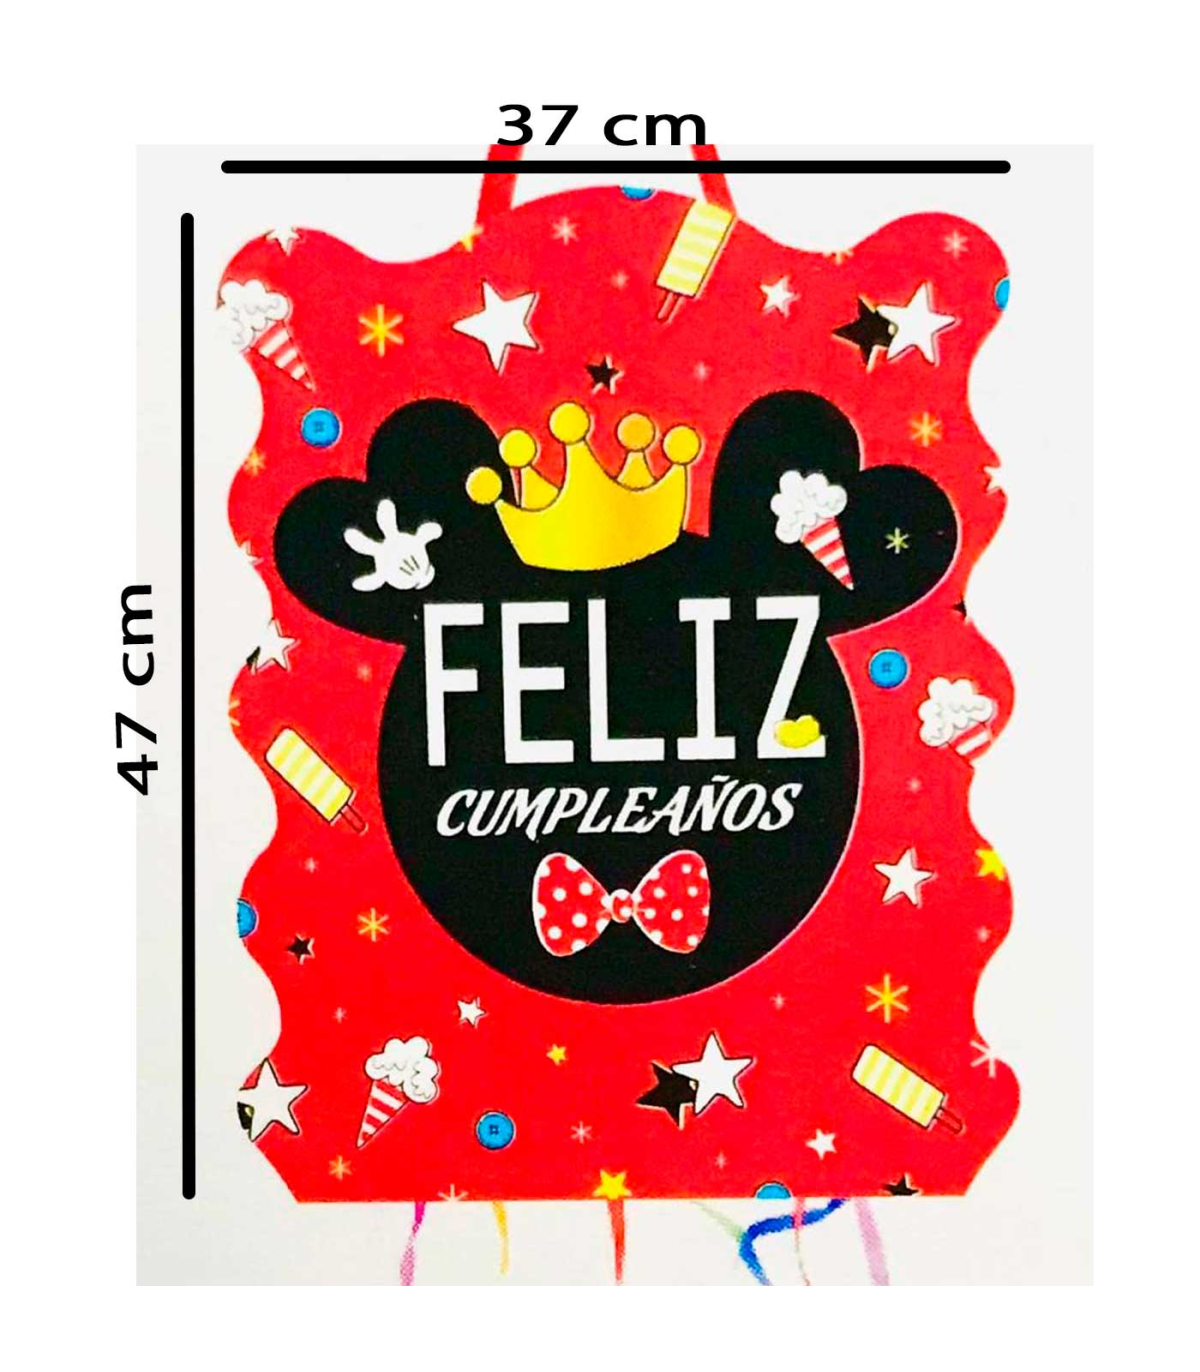 Tradineur - Piñata de mickey para cumpleaños, cartón, para rellenar con  golosinas, chuches, niños, decoración infantil para fies